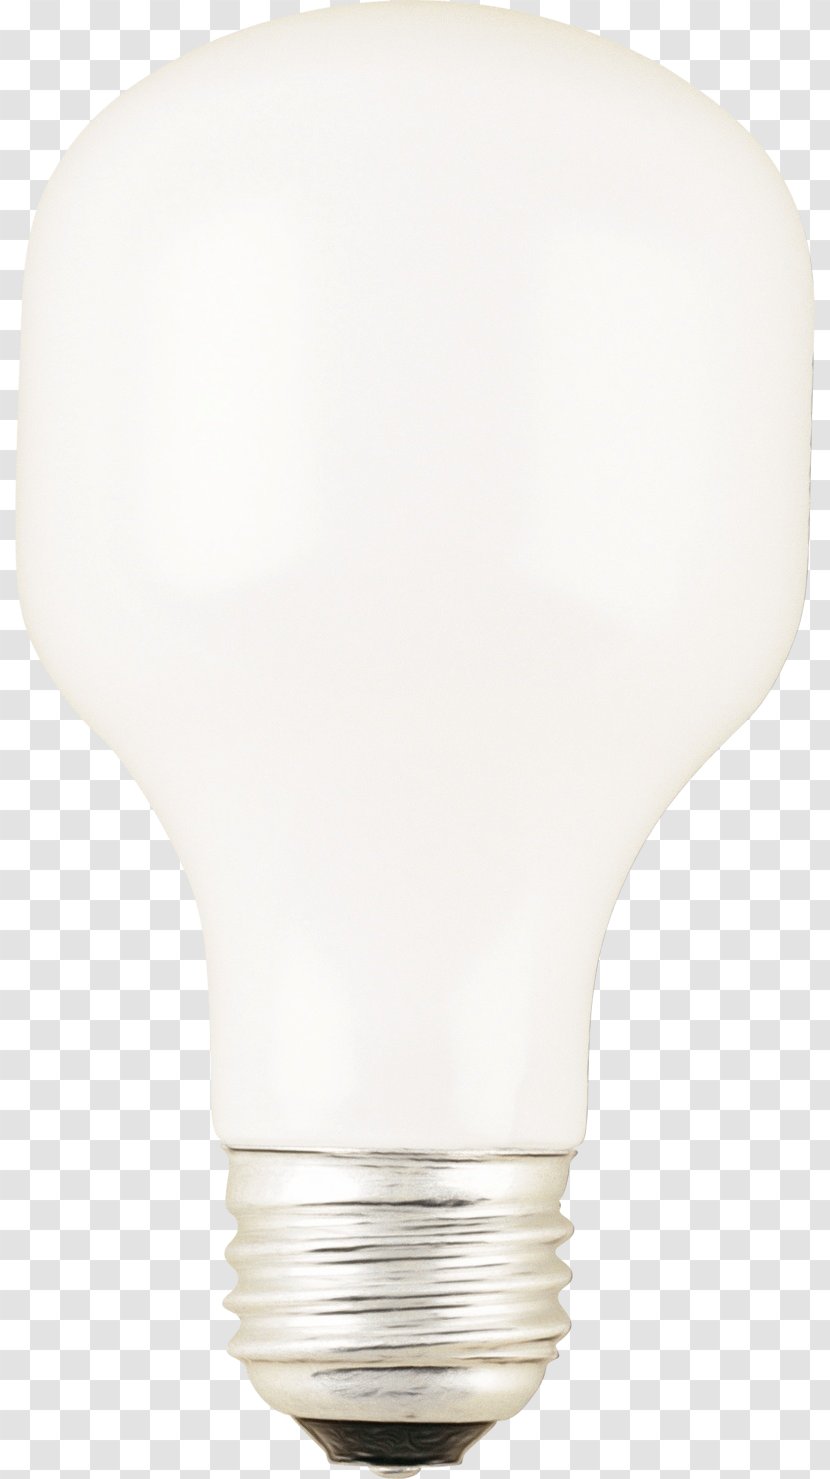 Light Bulb - Compact Fluorescent Lamp Fixture Transparent PNG